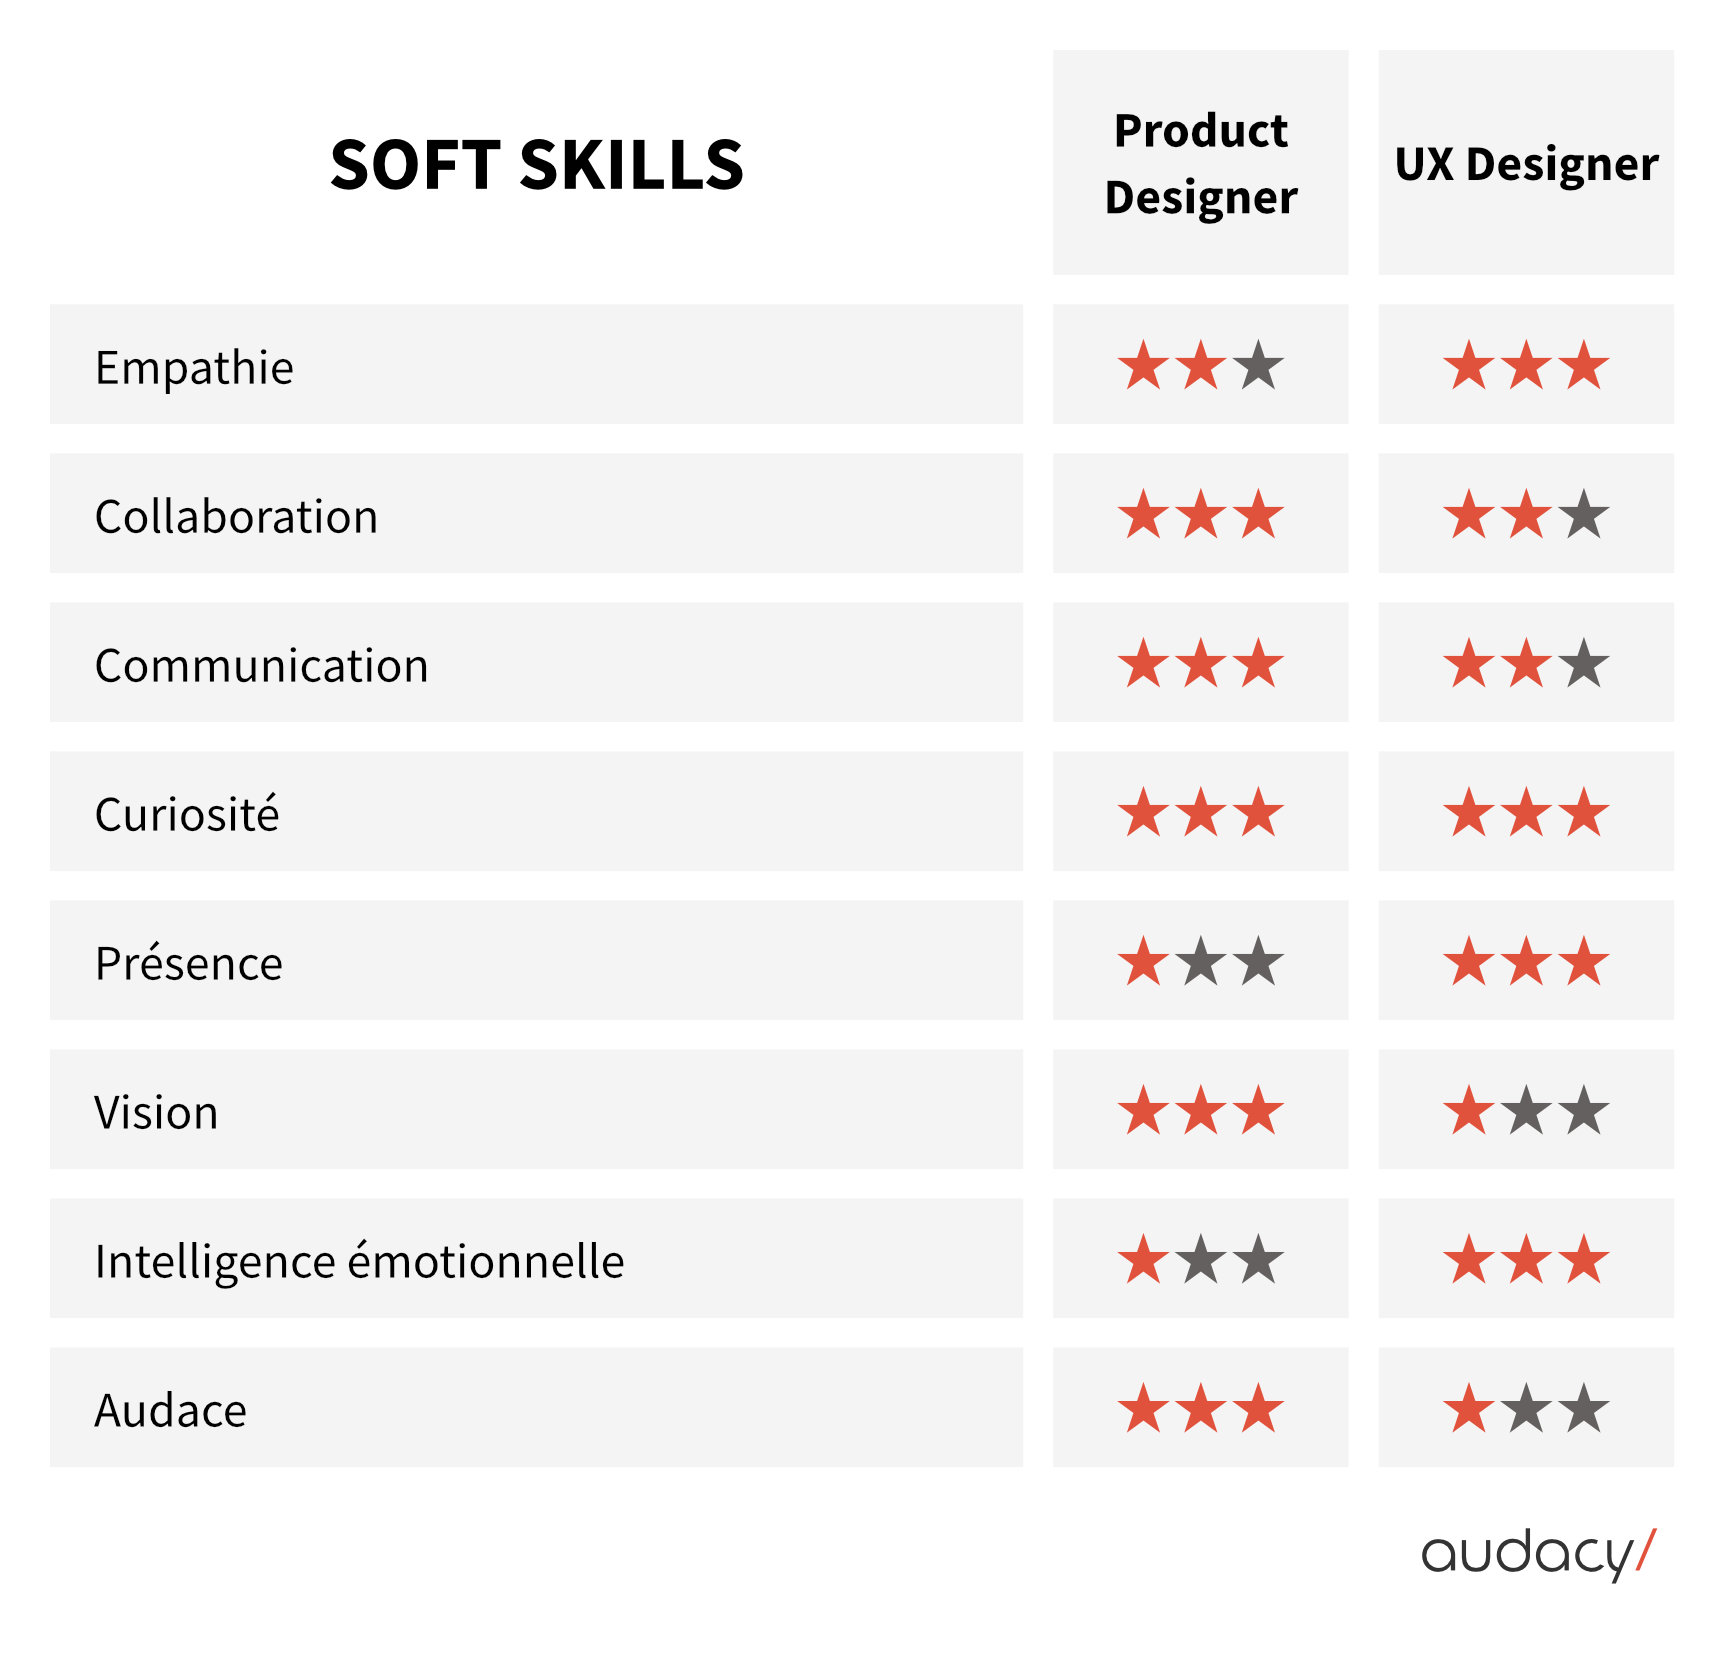 Product-designer-vs-ux-designer-audacy-soft-skills